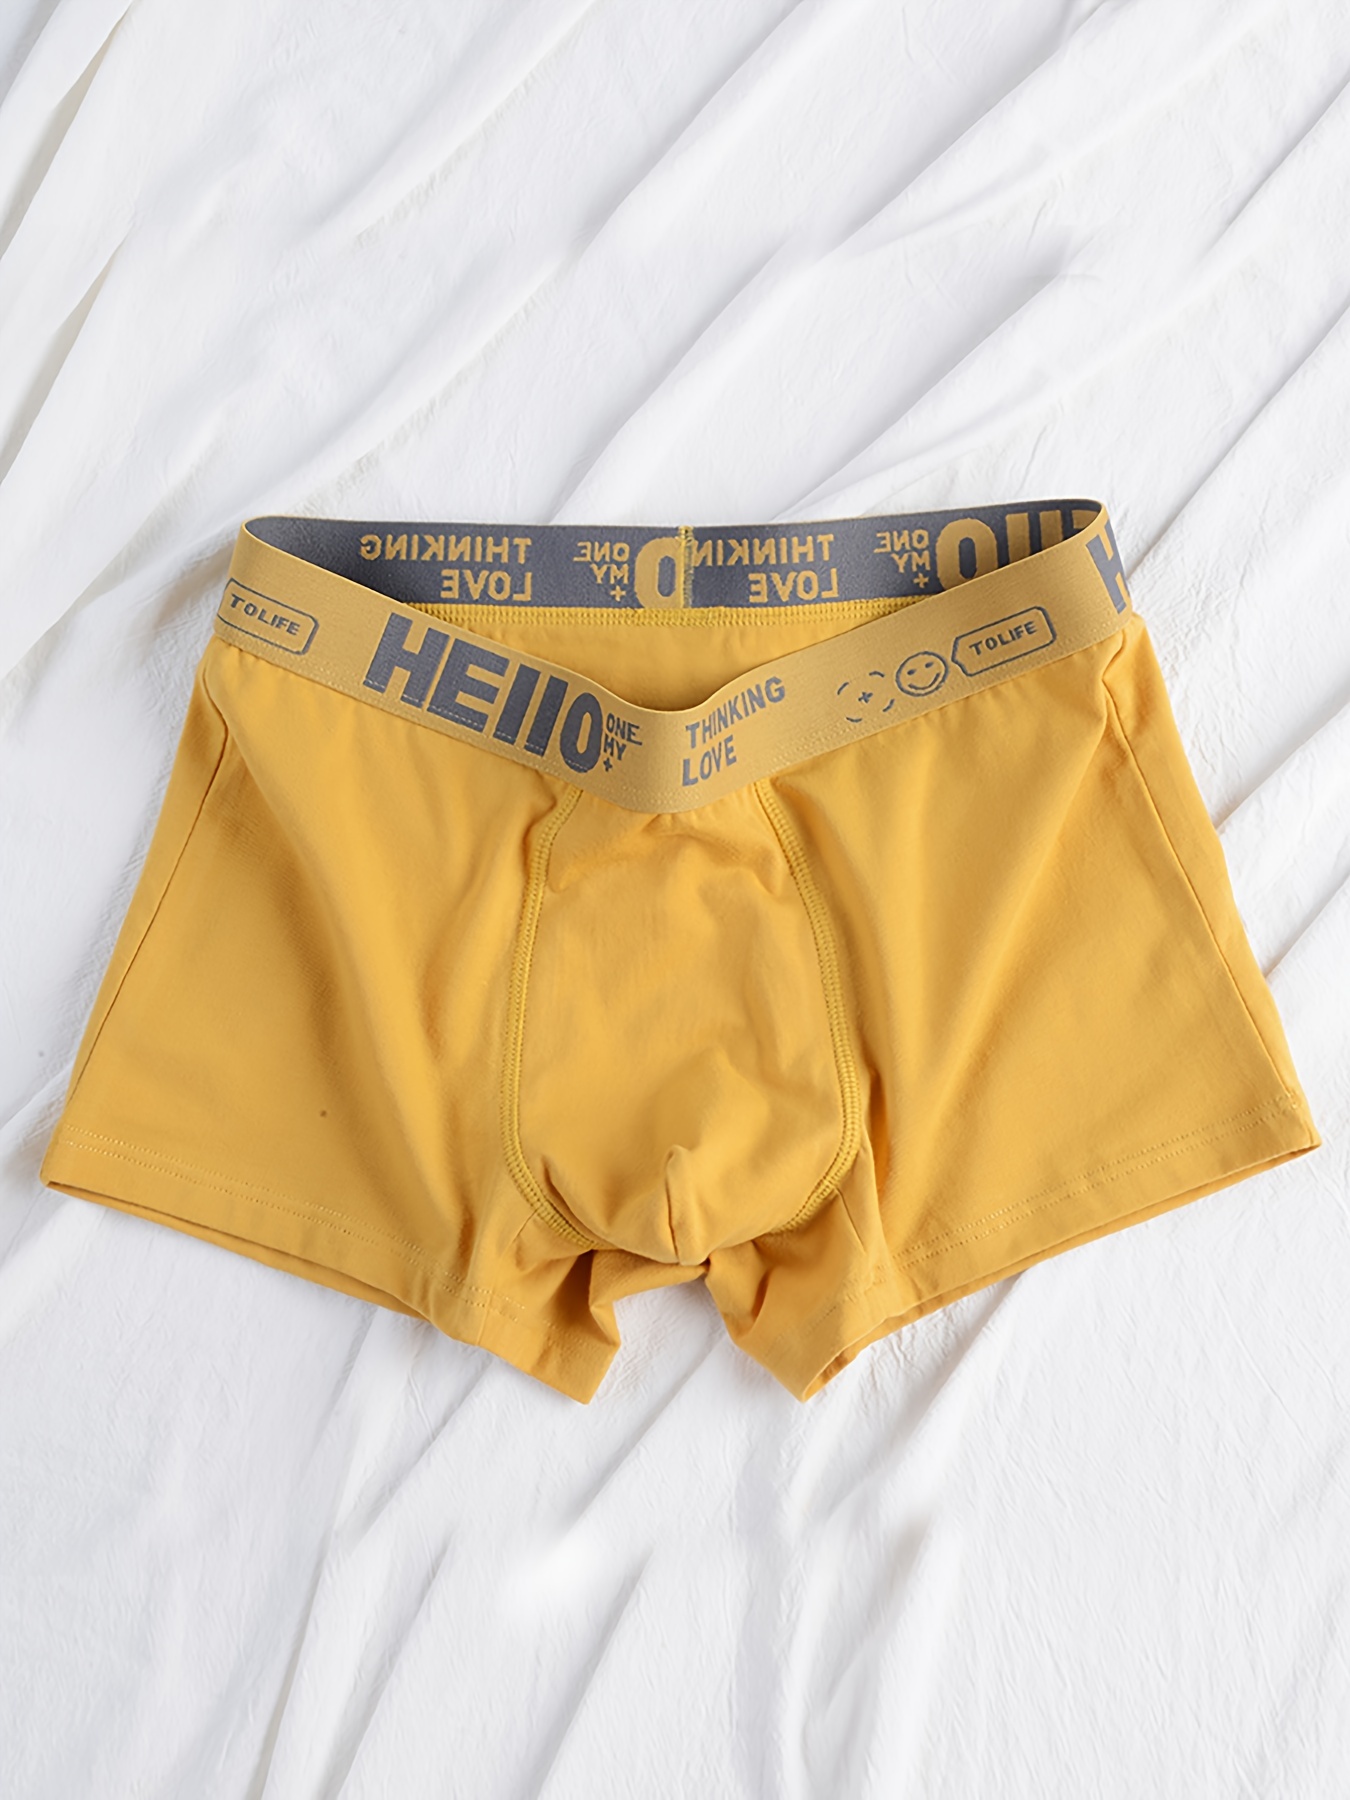 HY Men's See-Through Mesh Underpants